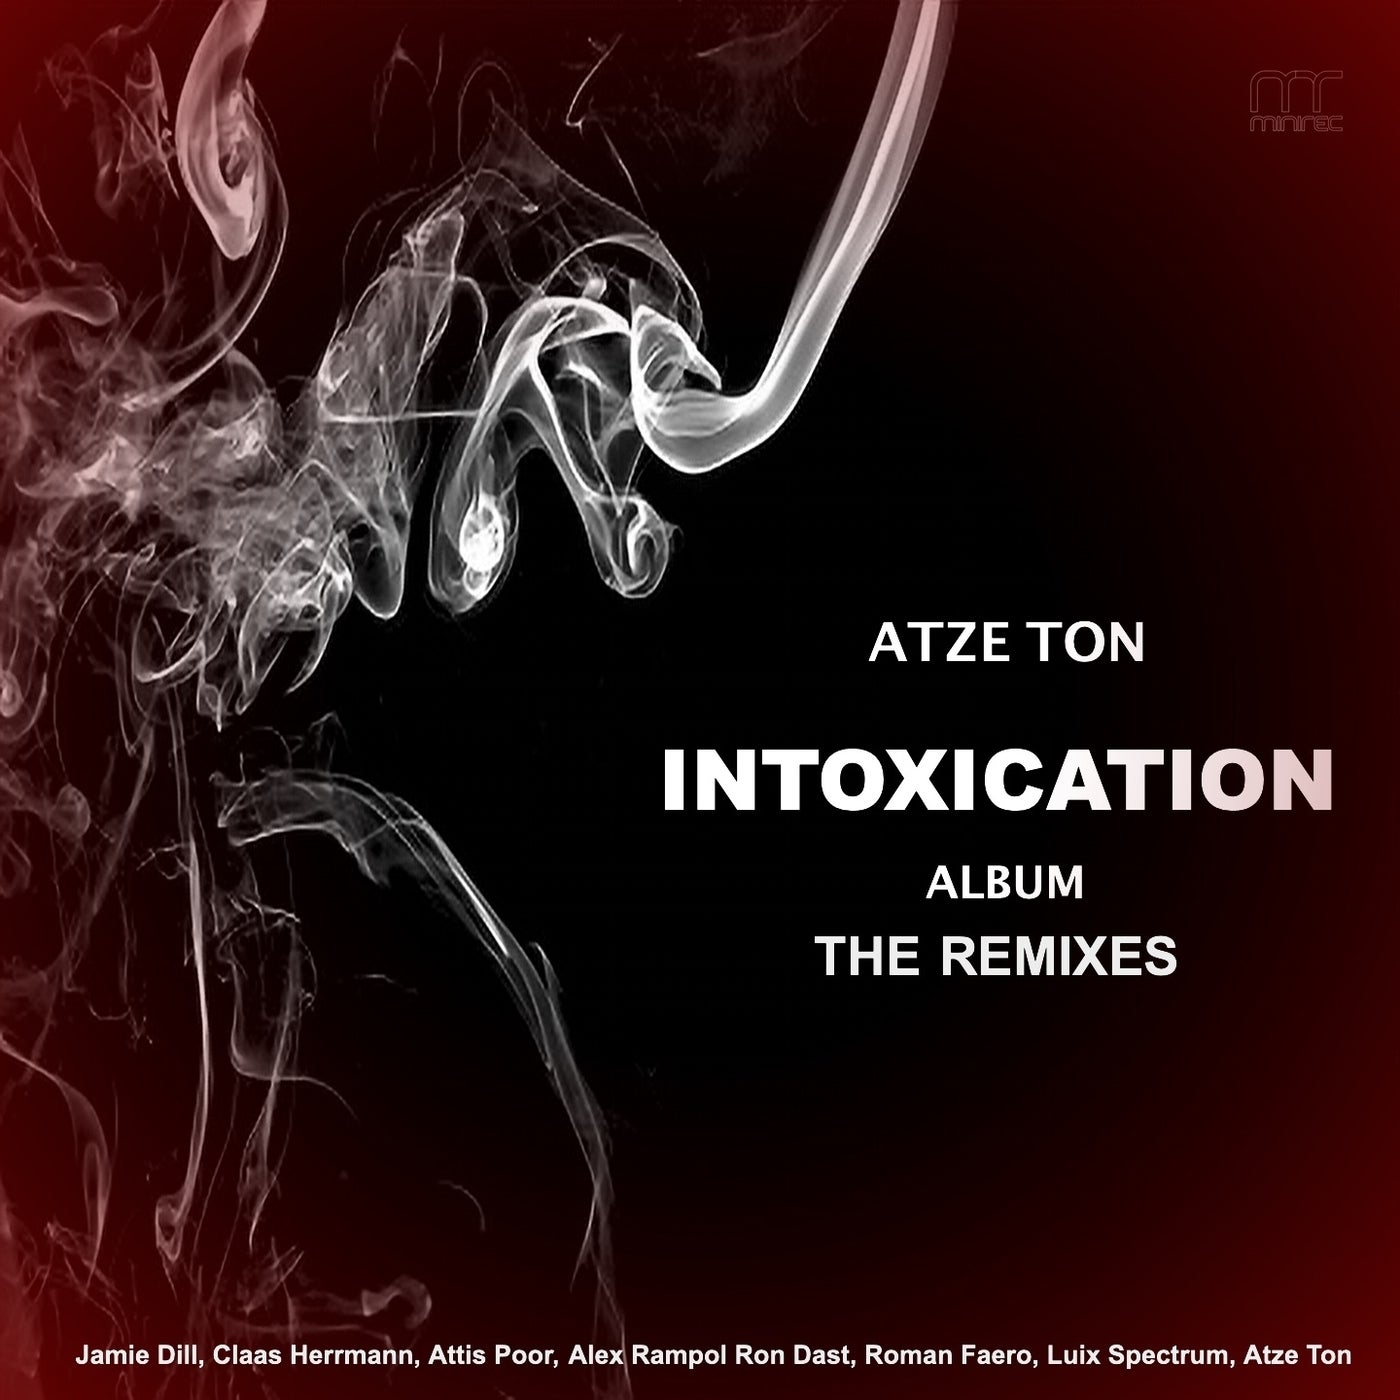 Intoxication Album (The Remixes)